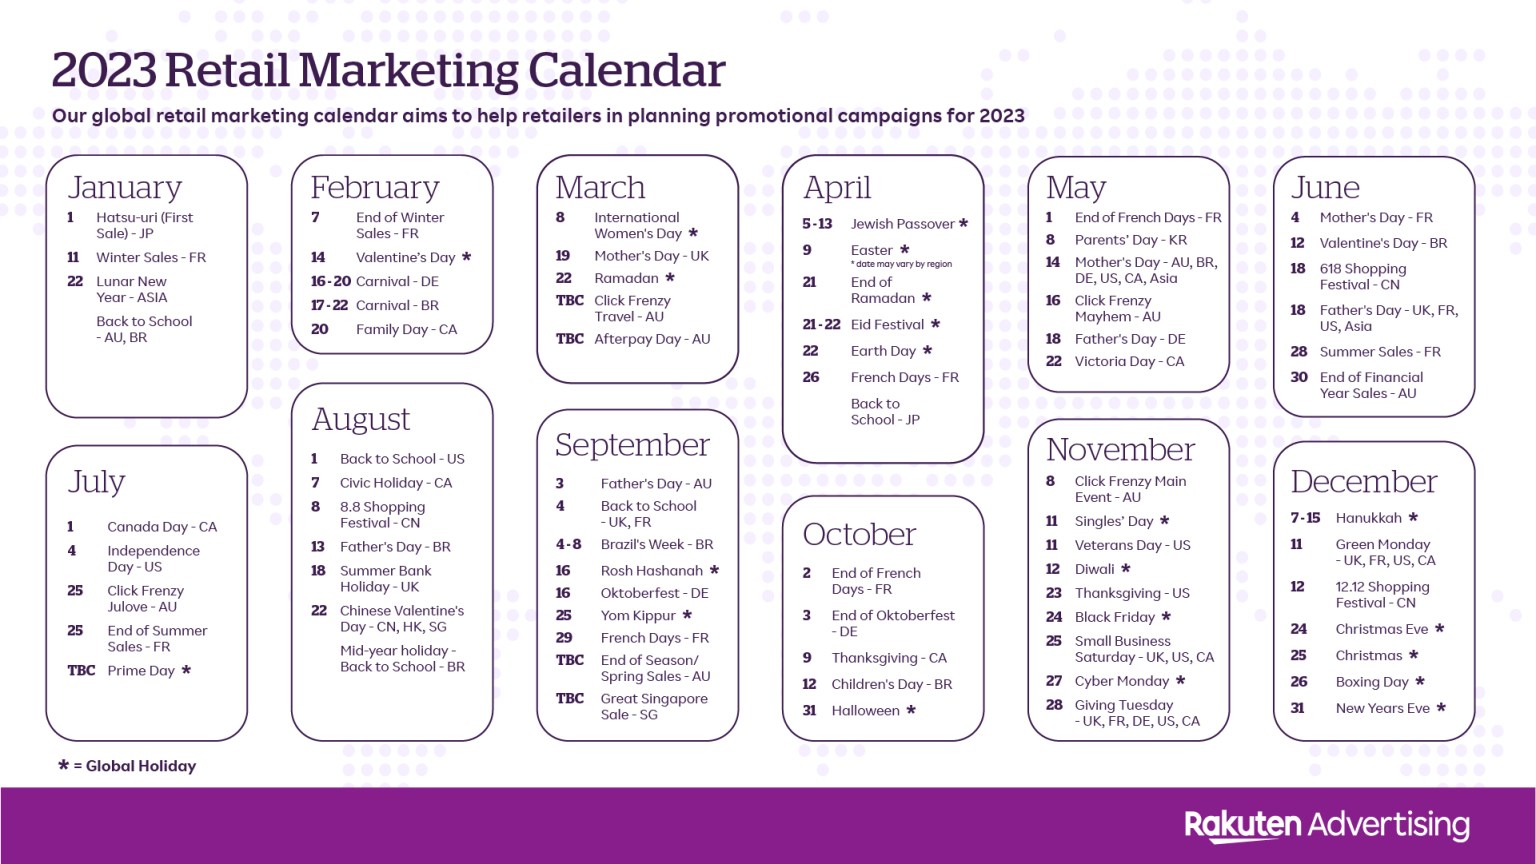 Know Your Dates 2023 Retail Marketing Calendar Rakuten Advertising Blog